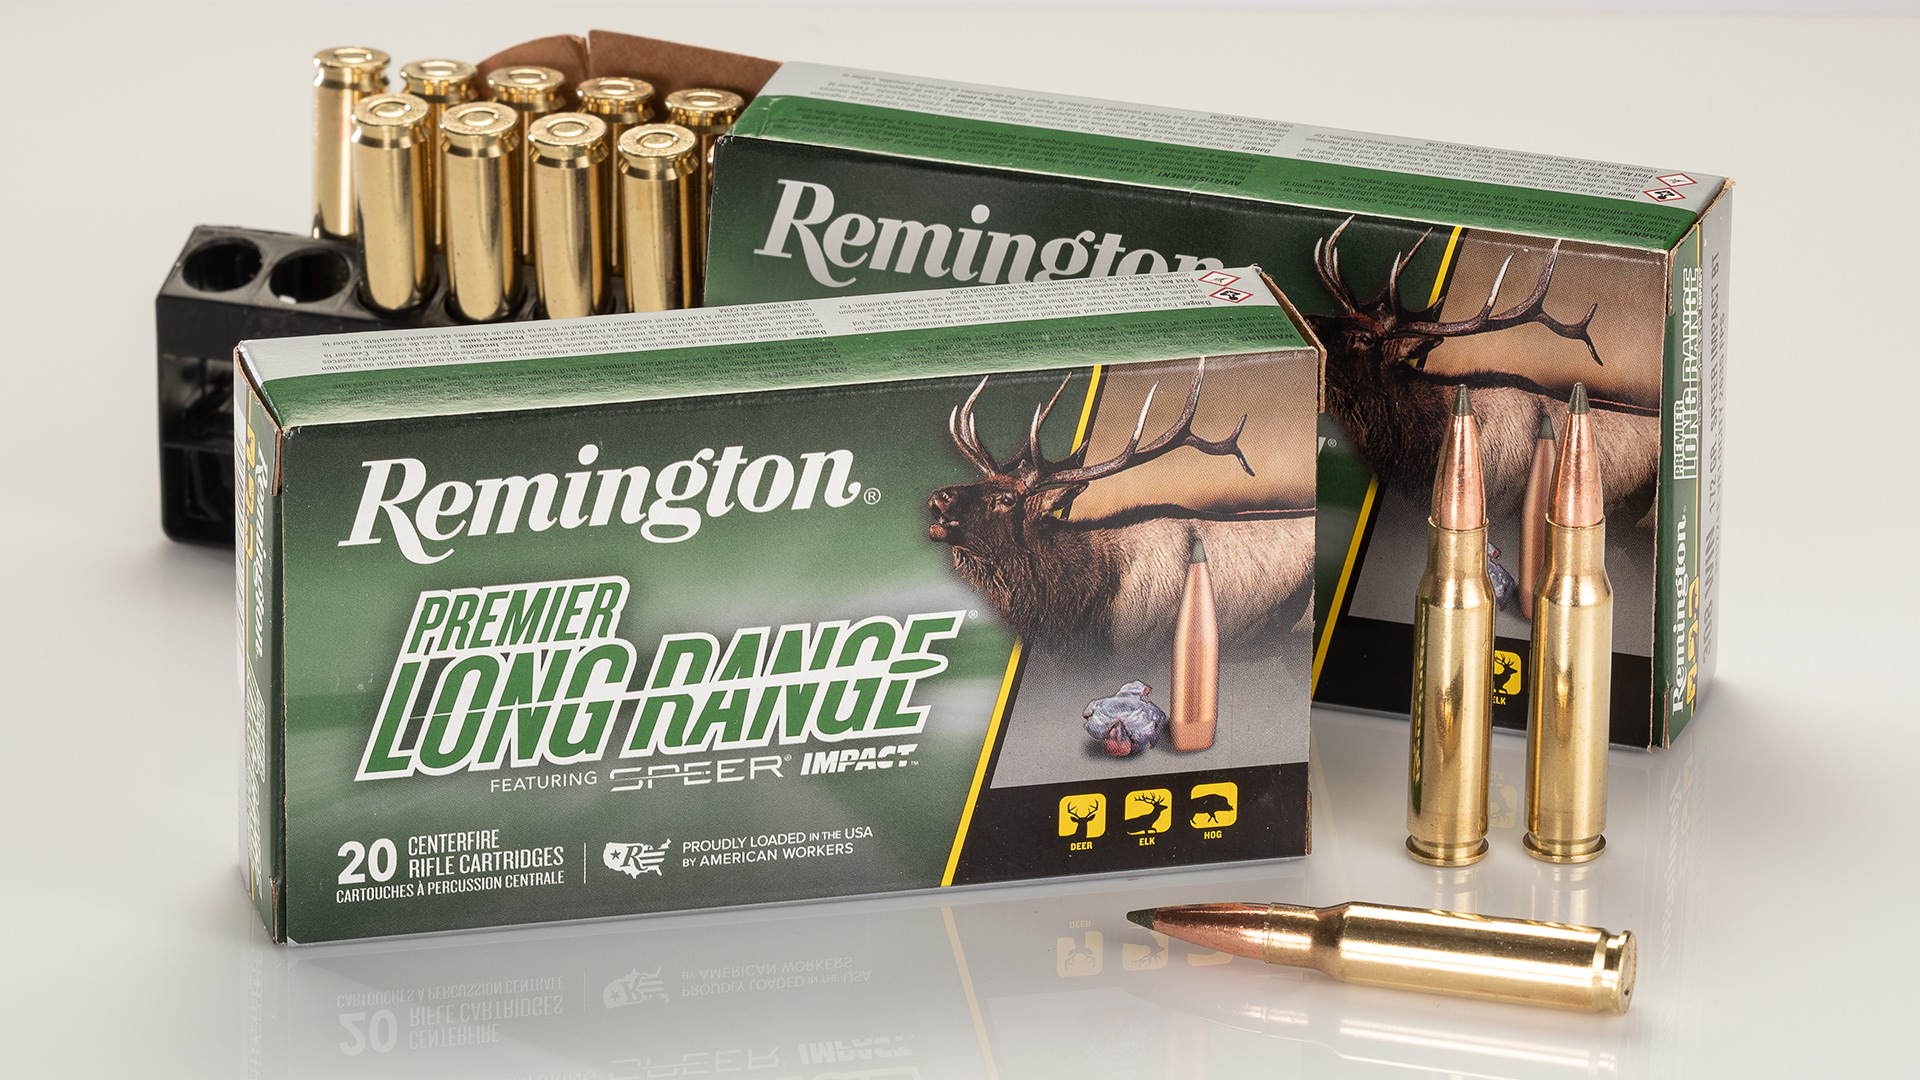 https://www.americanhunter.org/media/xdqlxf25/review-remington-premier-long-range-ammo-lead.jpg?anchor=center&mode=crop&width=987&height=551&rnd=133410713830330000&quality=60